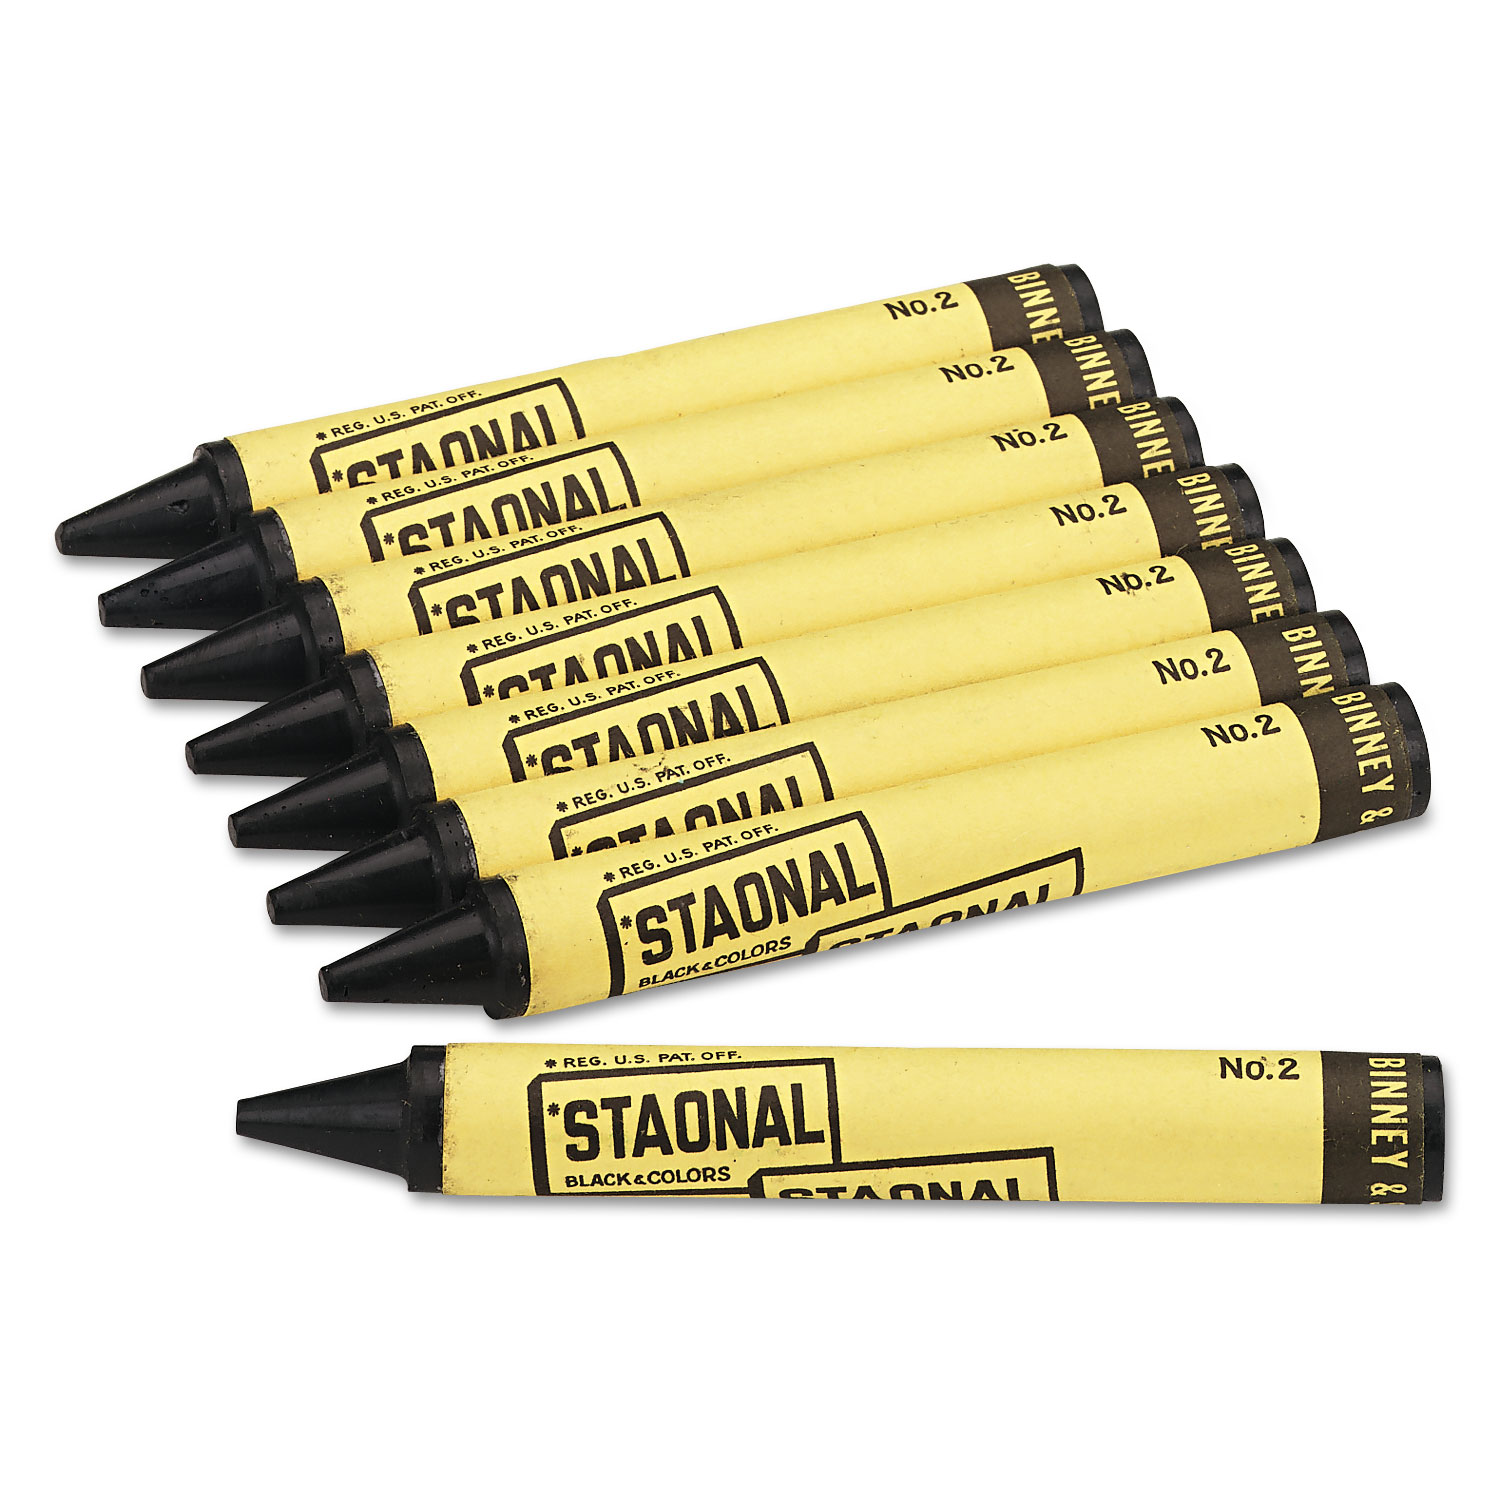 Staonal Marking Crayons, Black, 8/Box - superiorsanitary